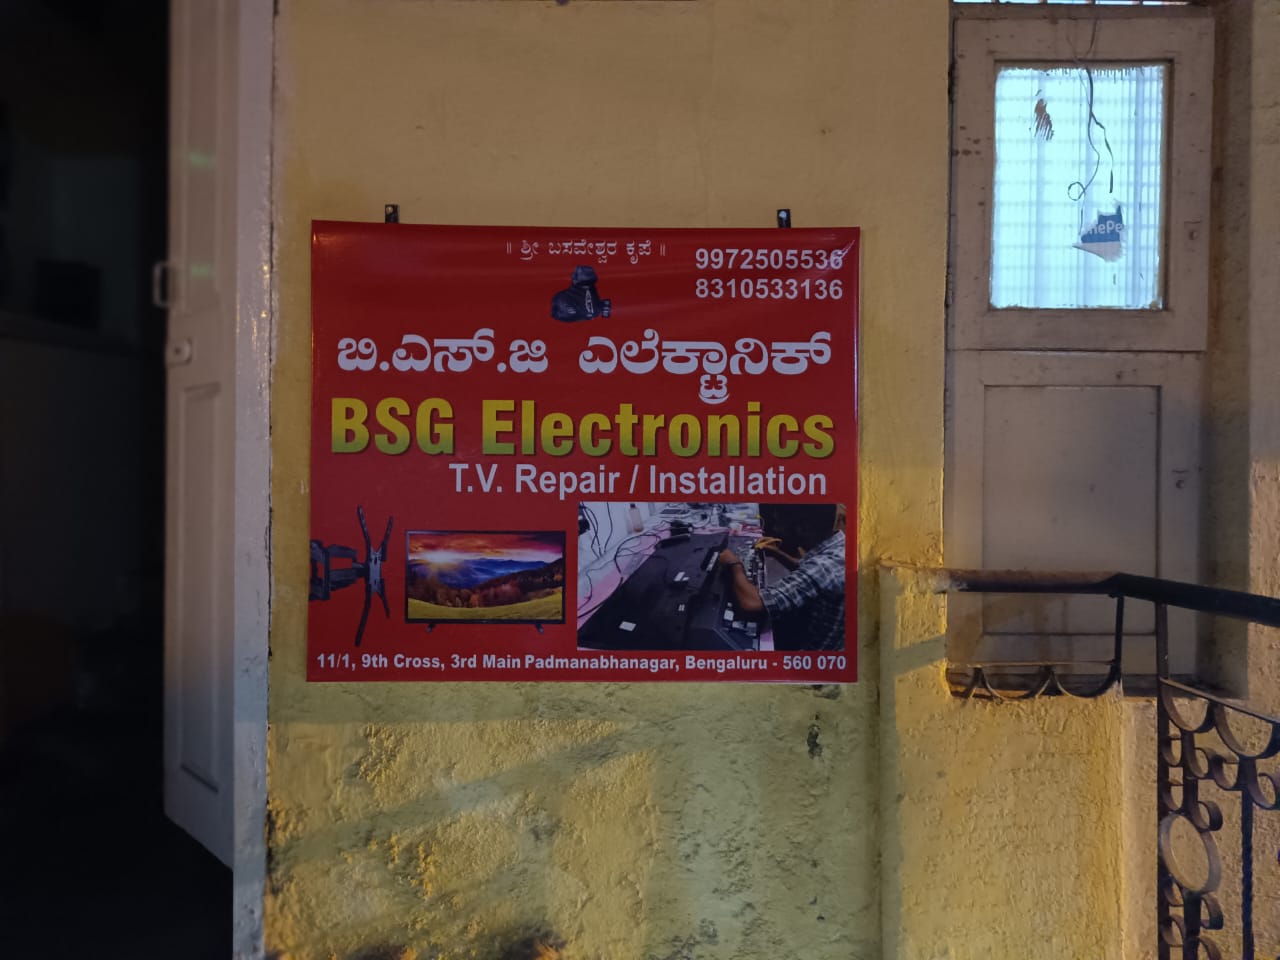 BSG Electronics